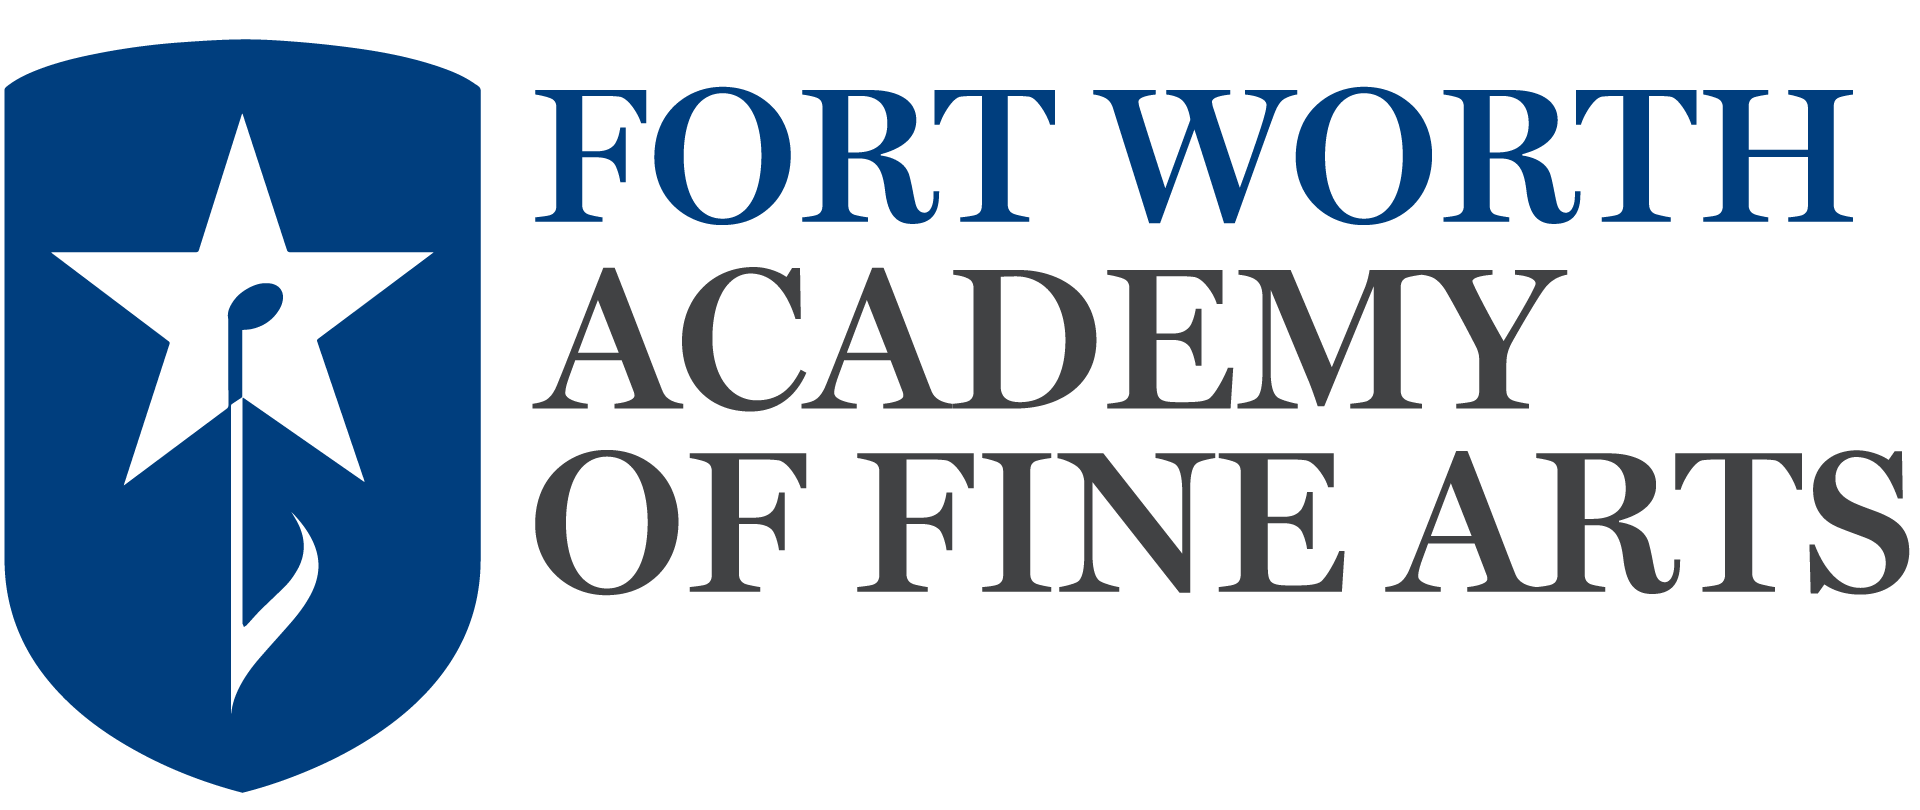 Fort Worth Academy of Fine Arts Logo